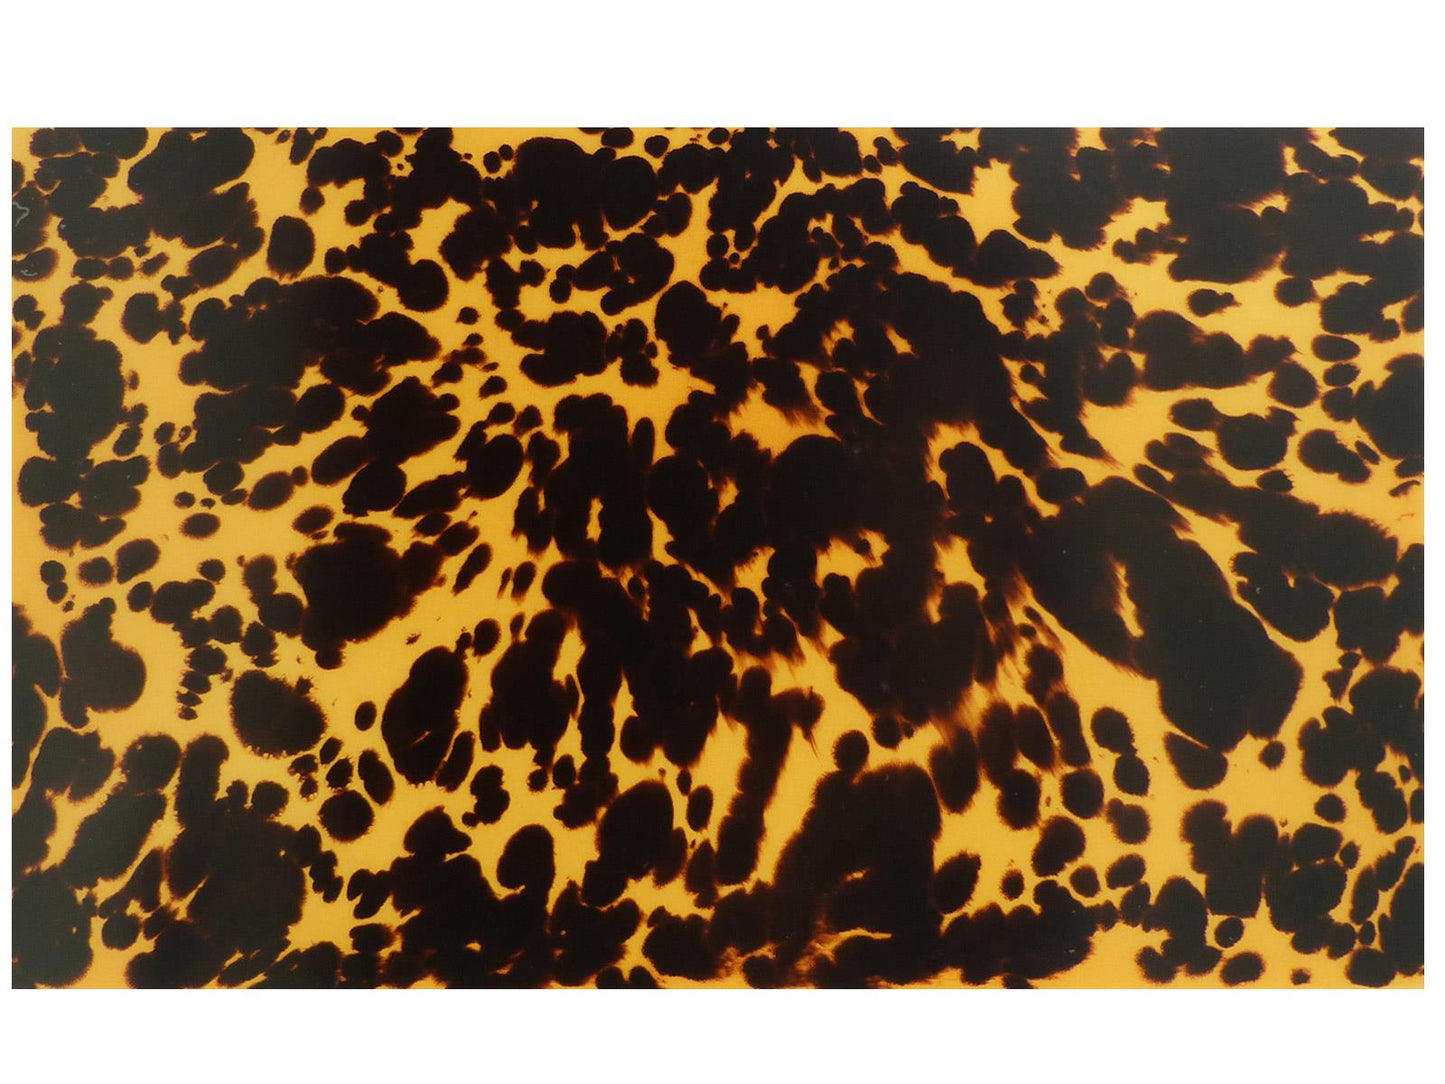 Luthitec Spotted Tortoiseshell PVC Sheet - 290x180x0.5mm (11.4x7.09x0.02")